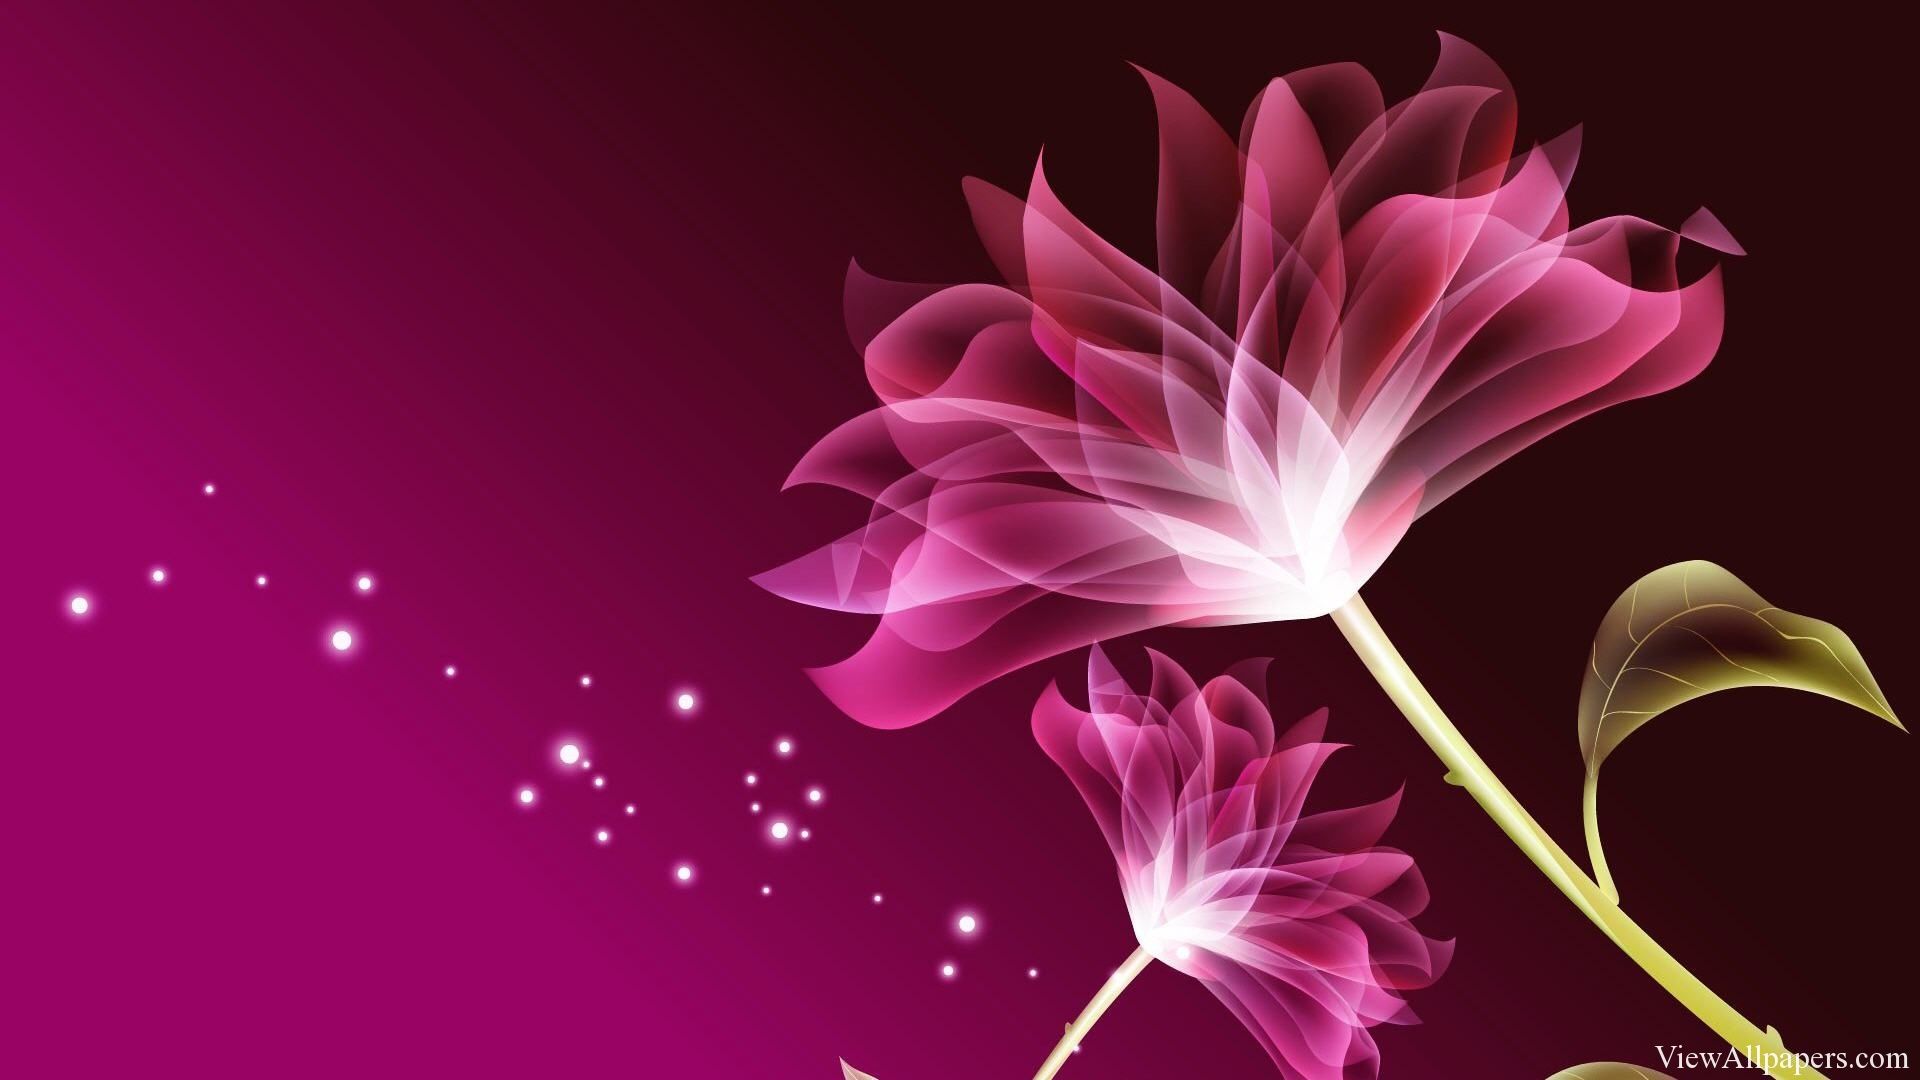 Free download 3D Pink Beautiful Flower Wallpaper